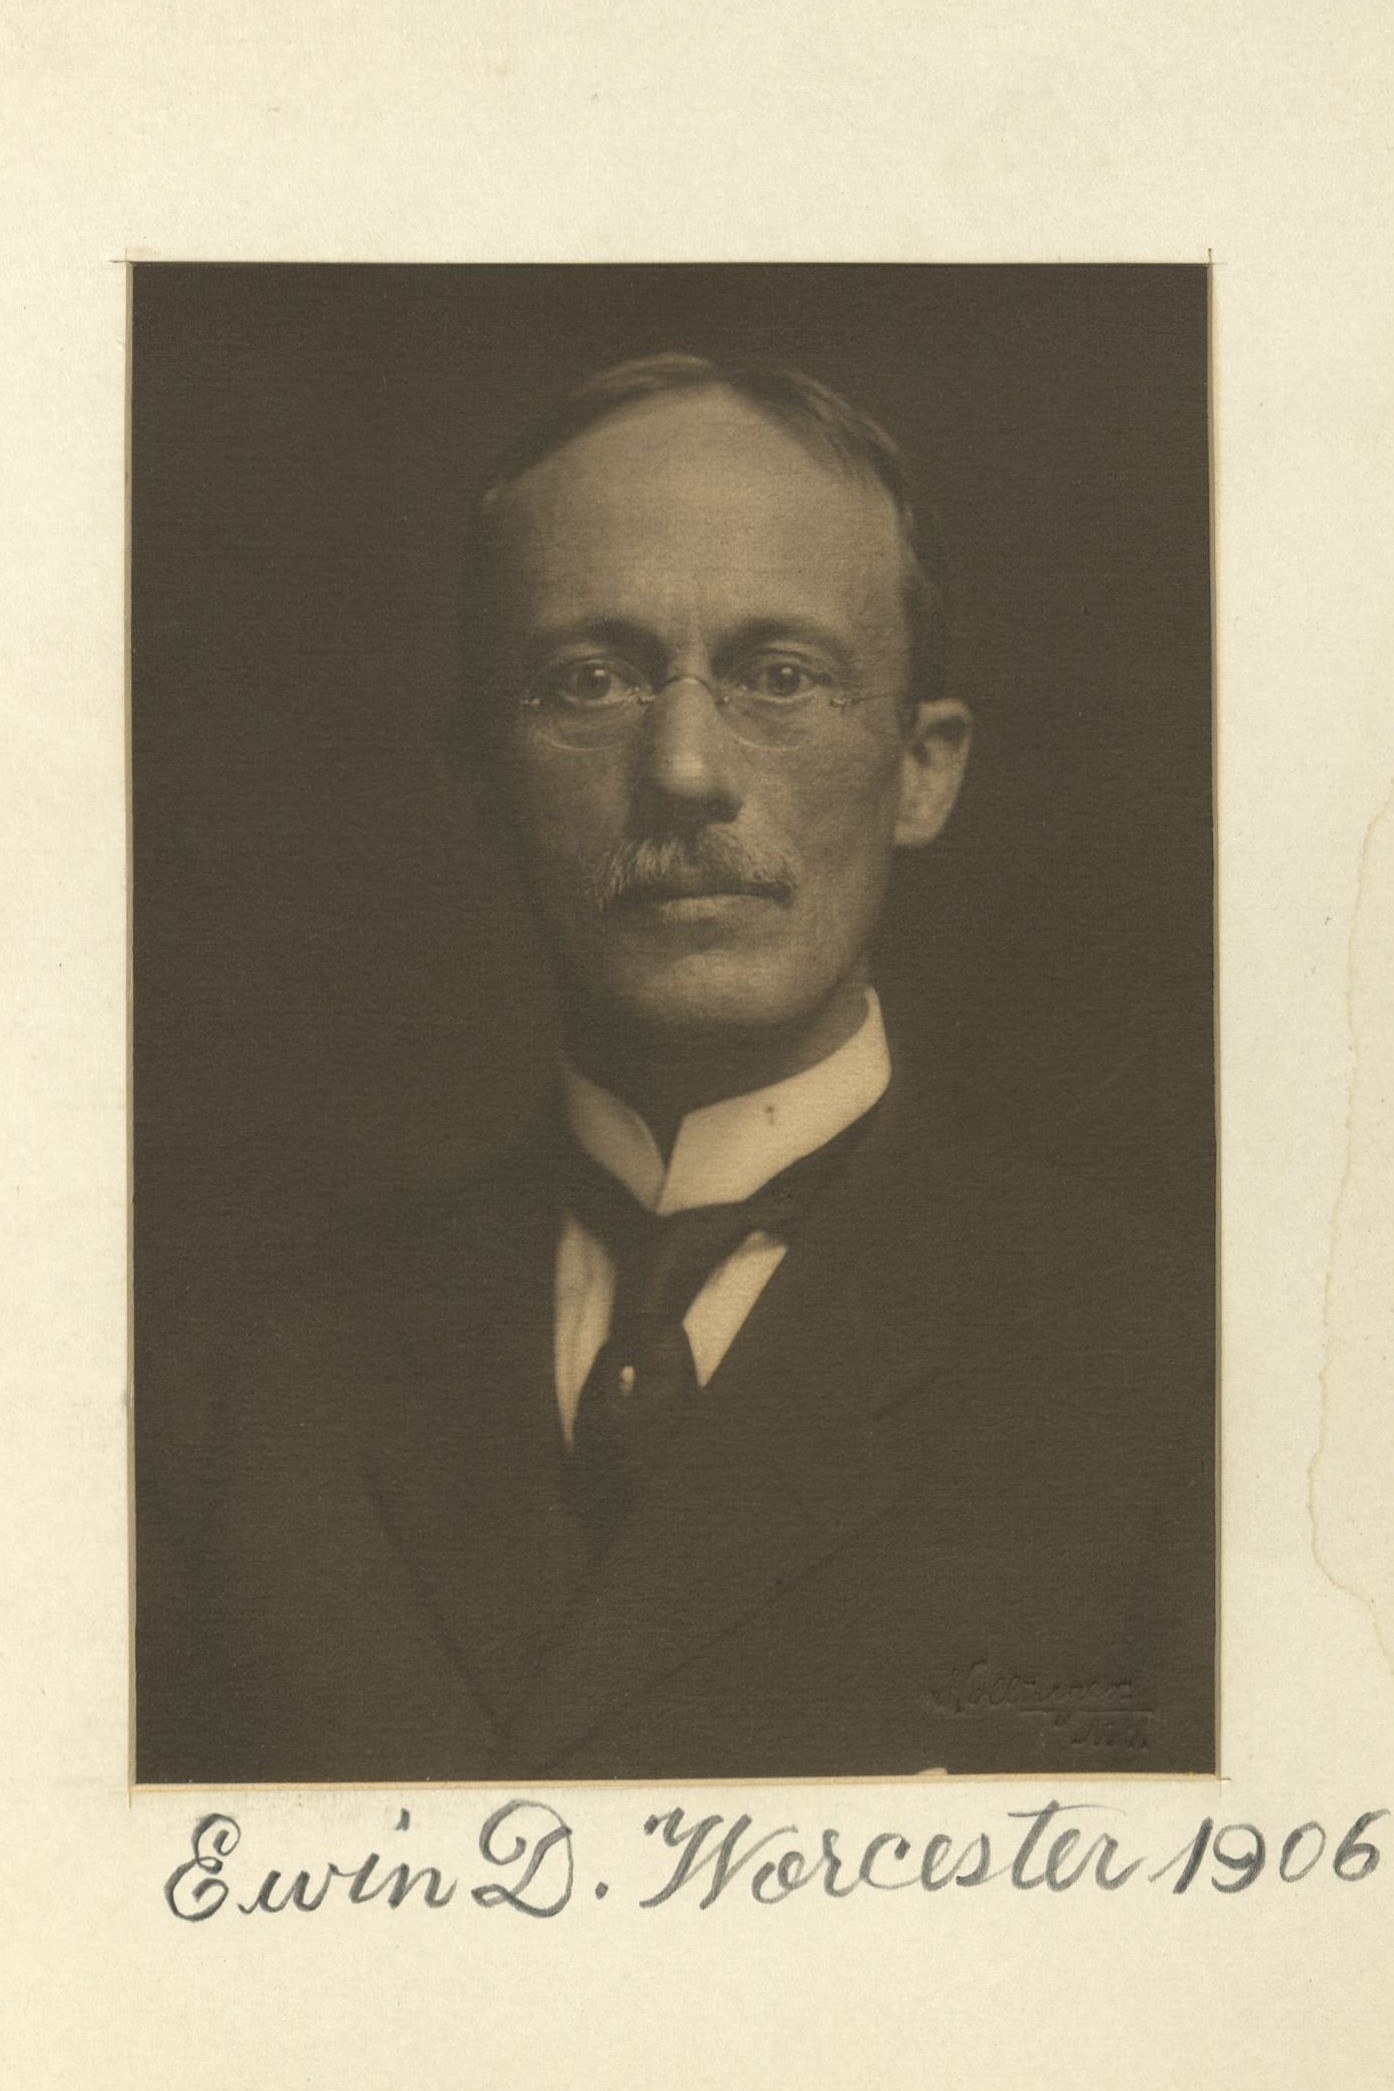 Member portrait of Edwin D. Worcester